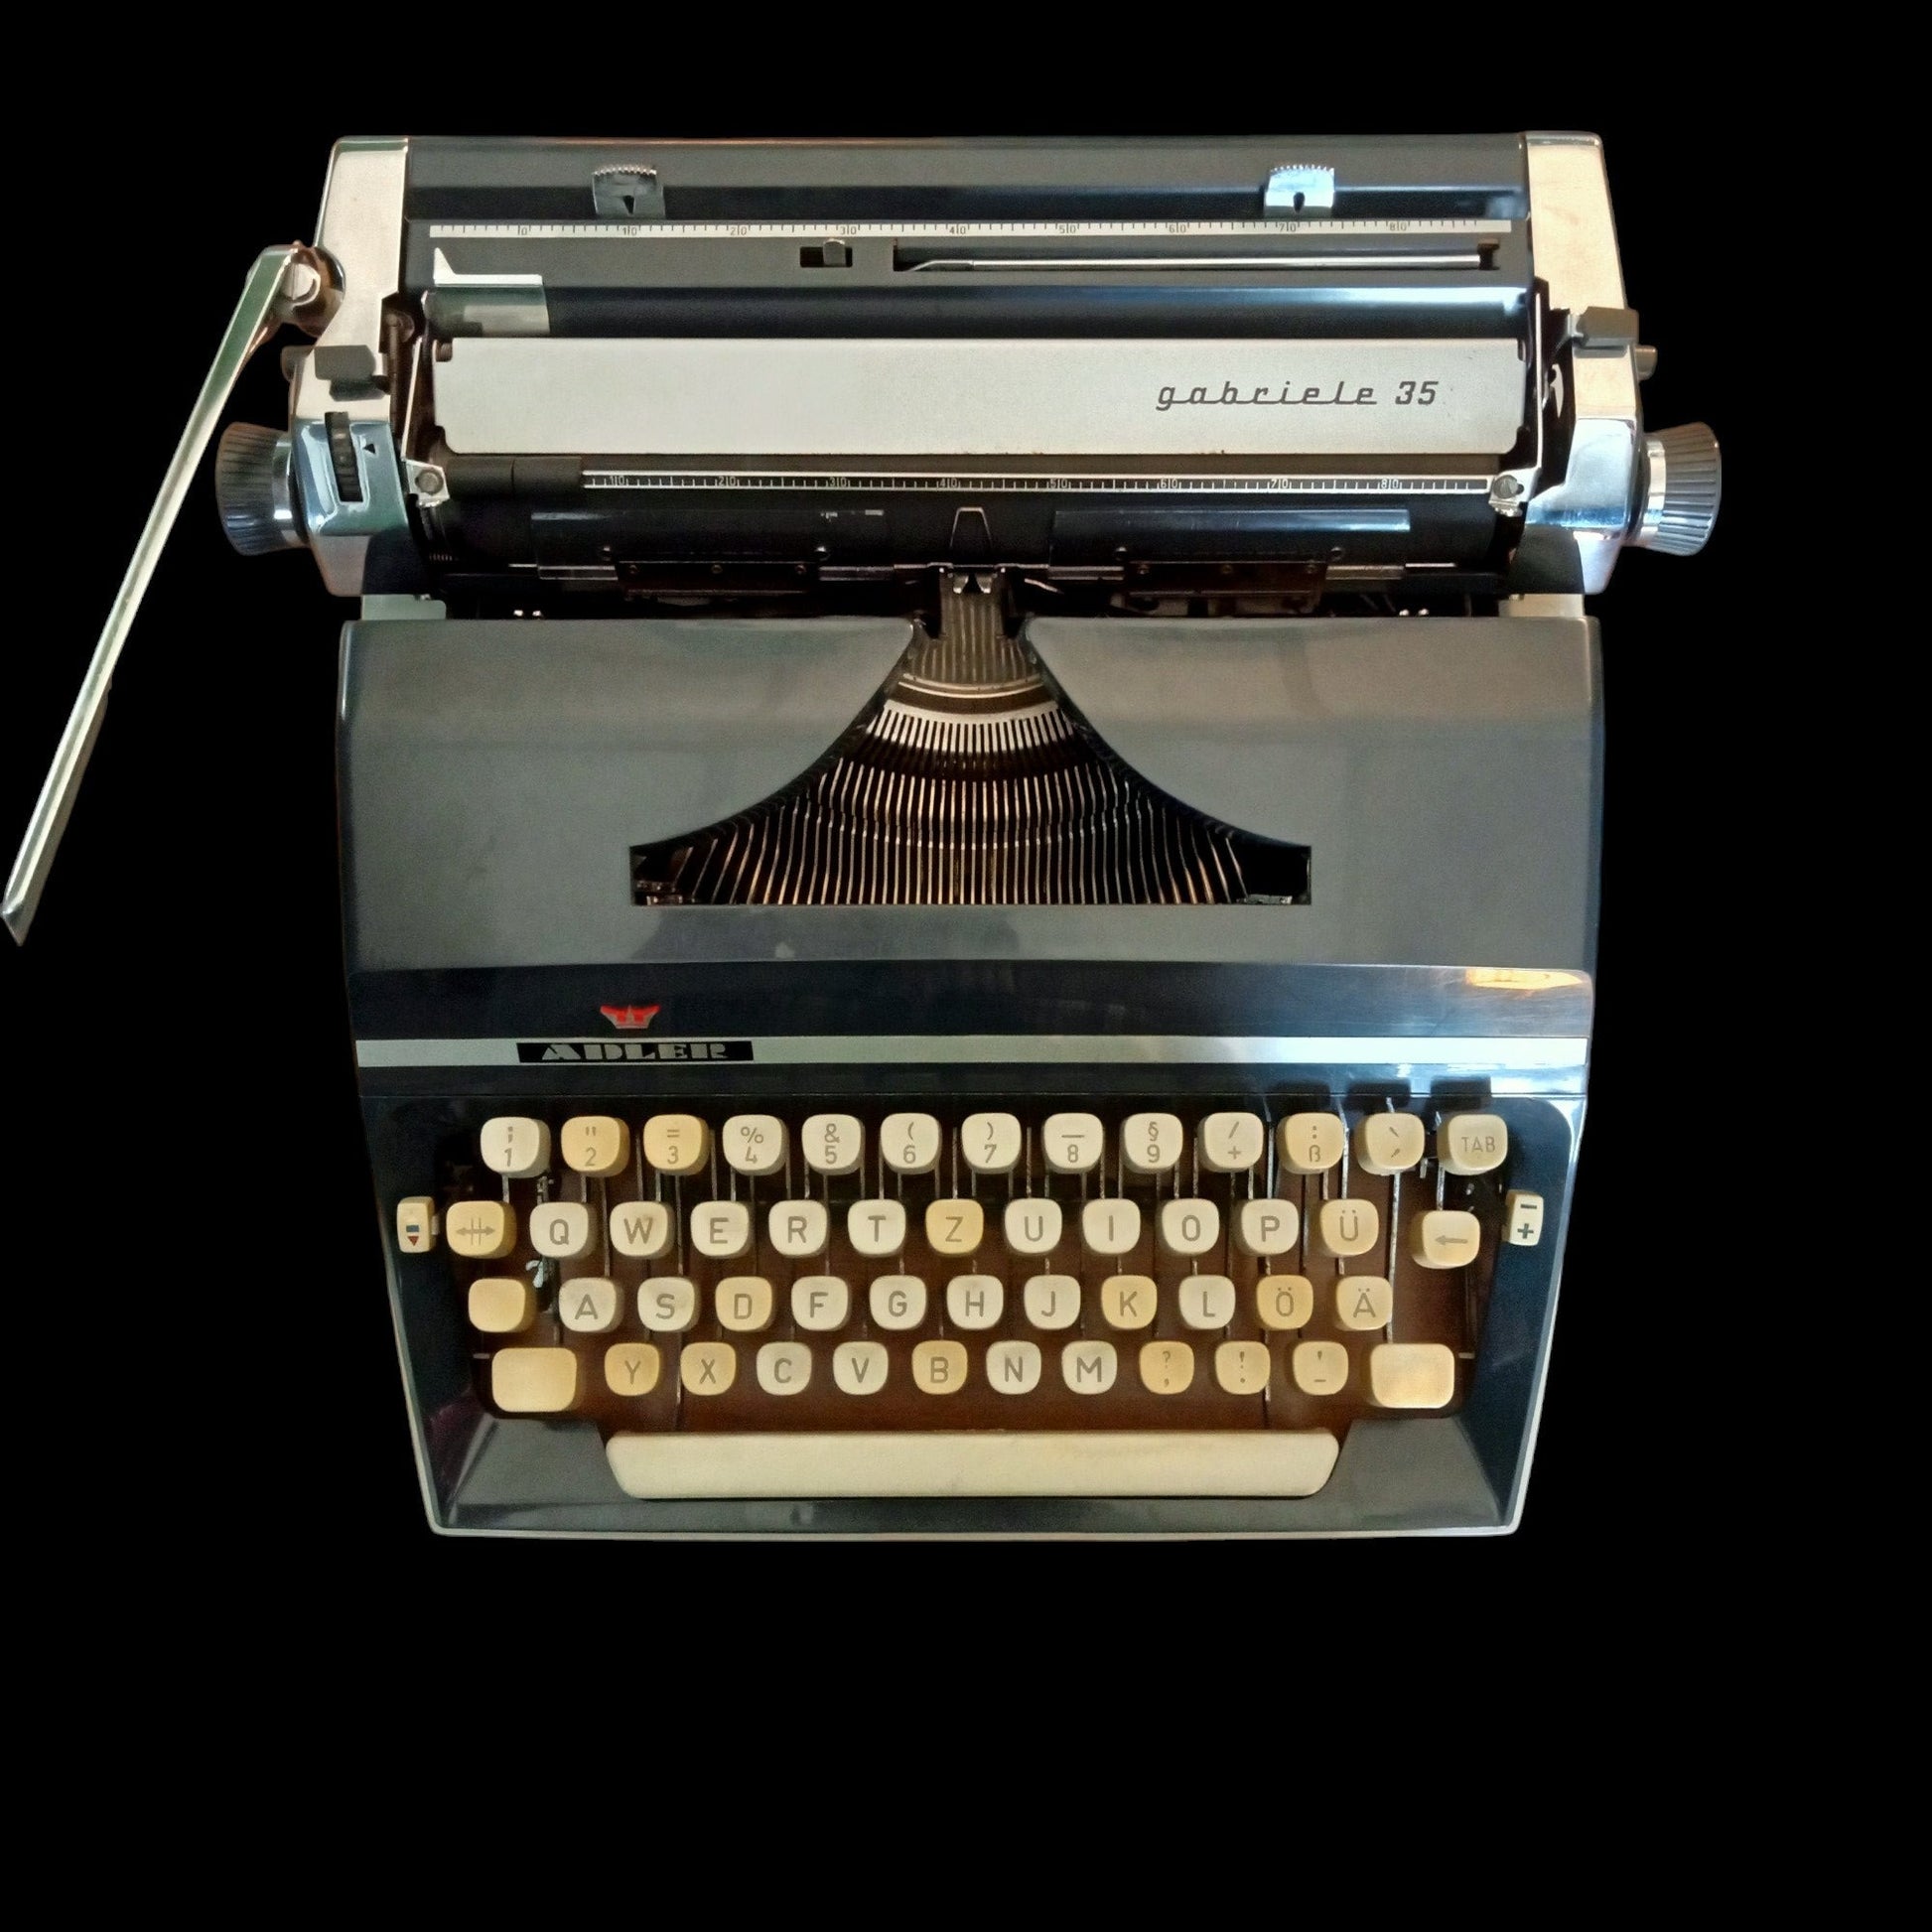 Image of Adler Gabriele 35 Typewriter. Available from universaltypewriterccompany.in